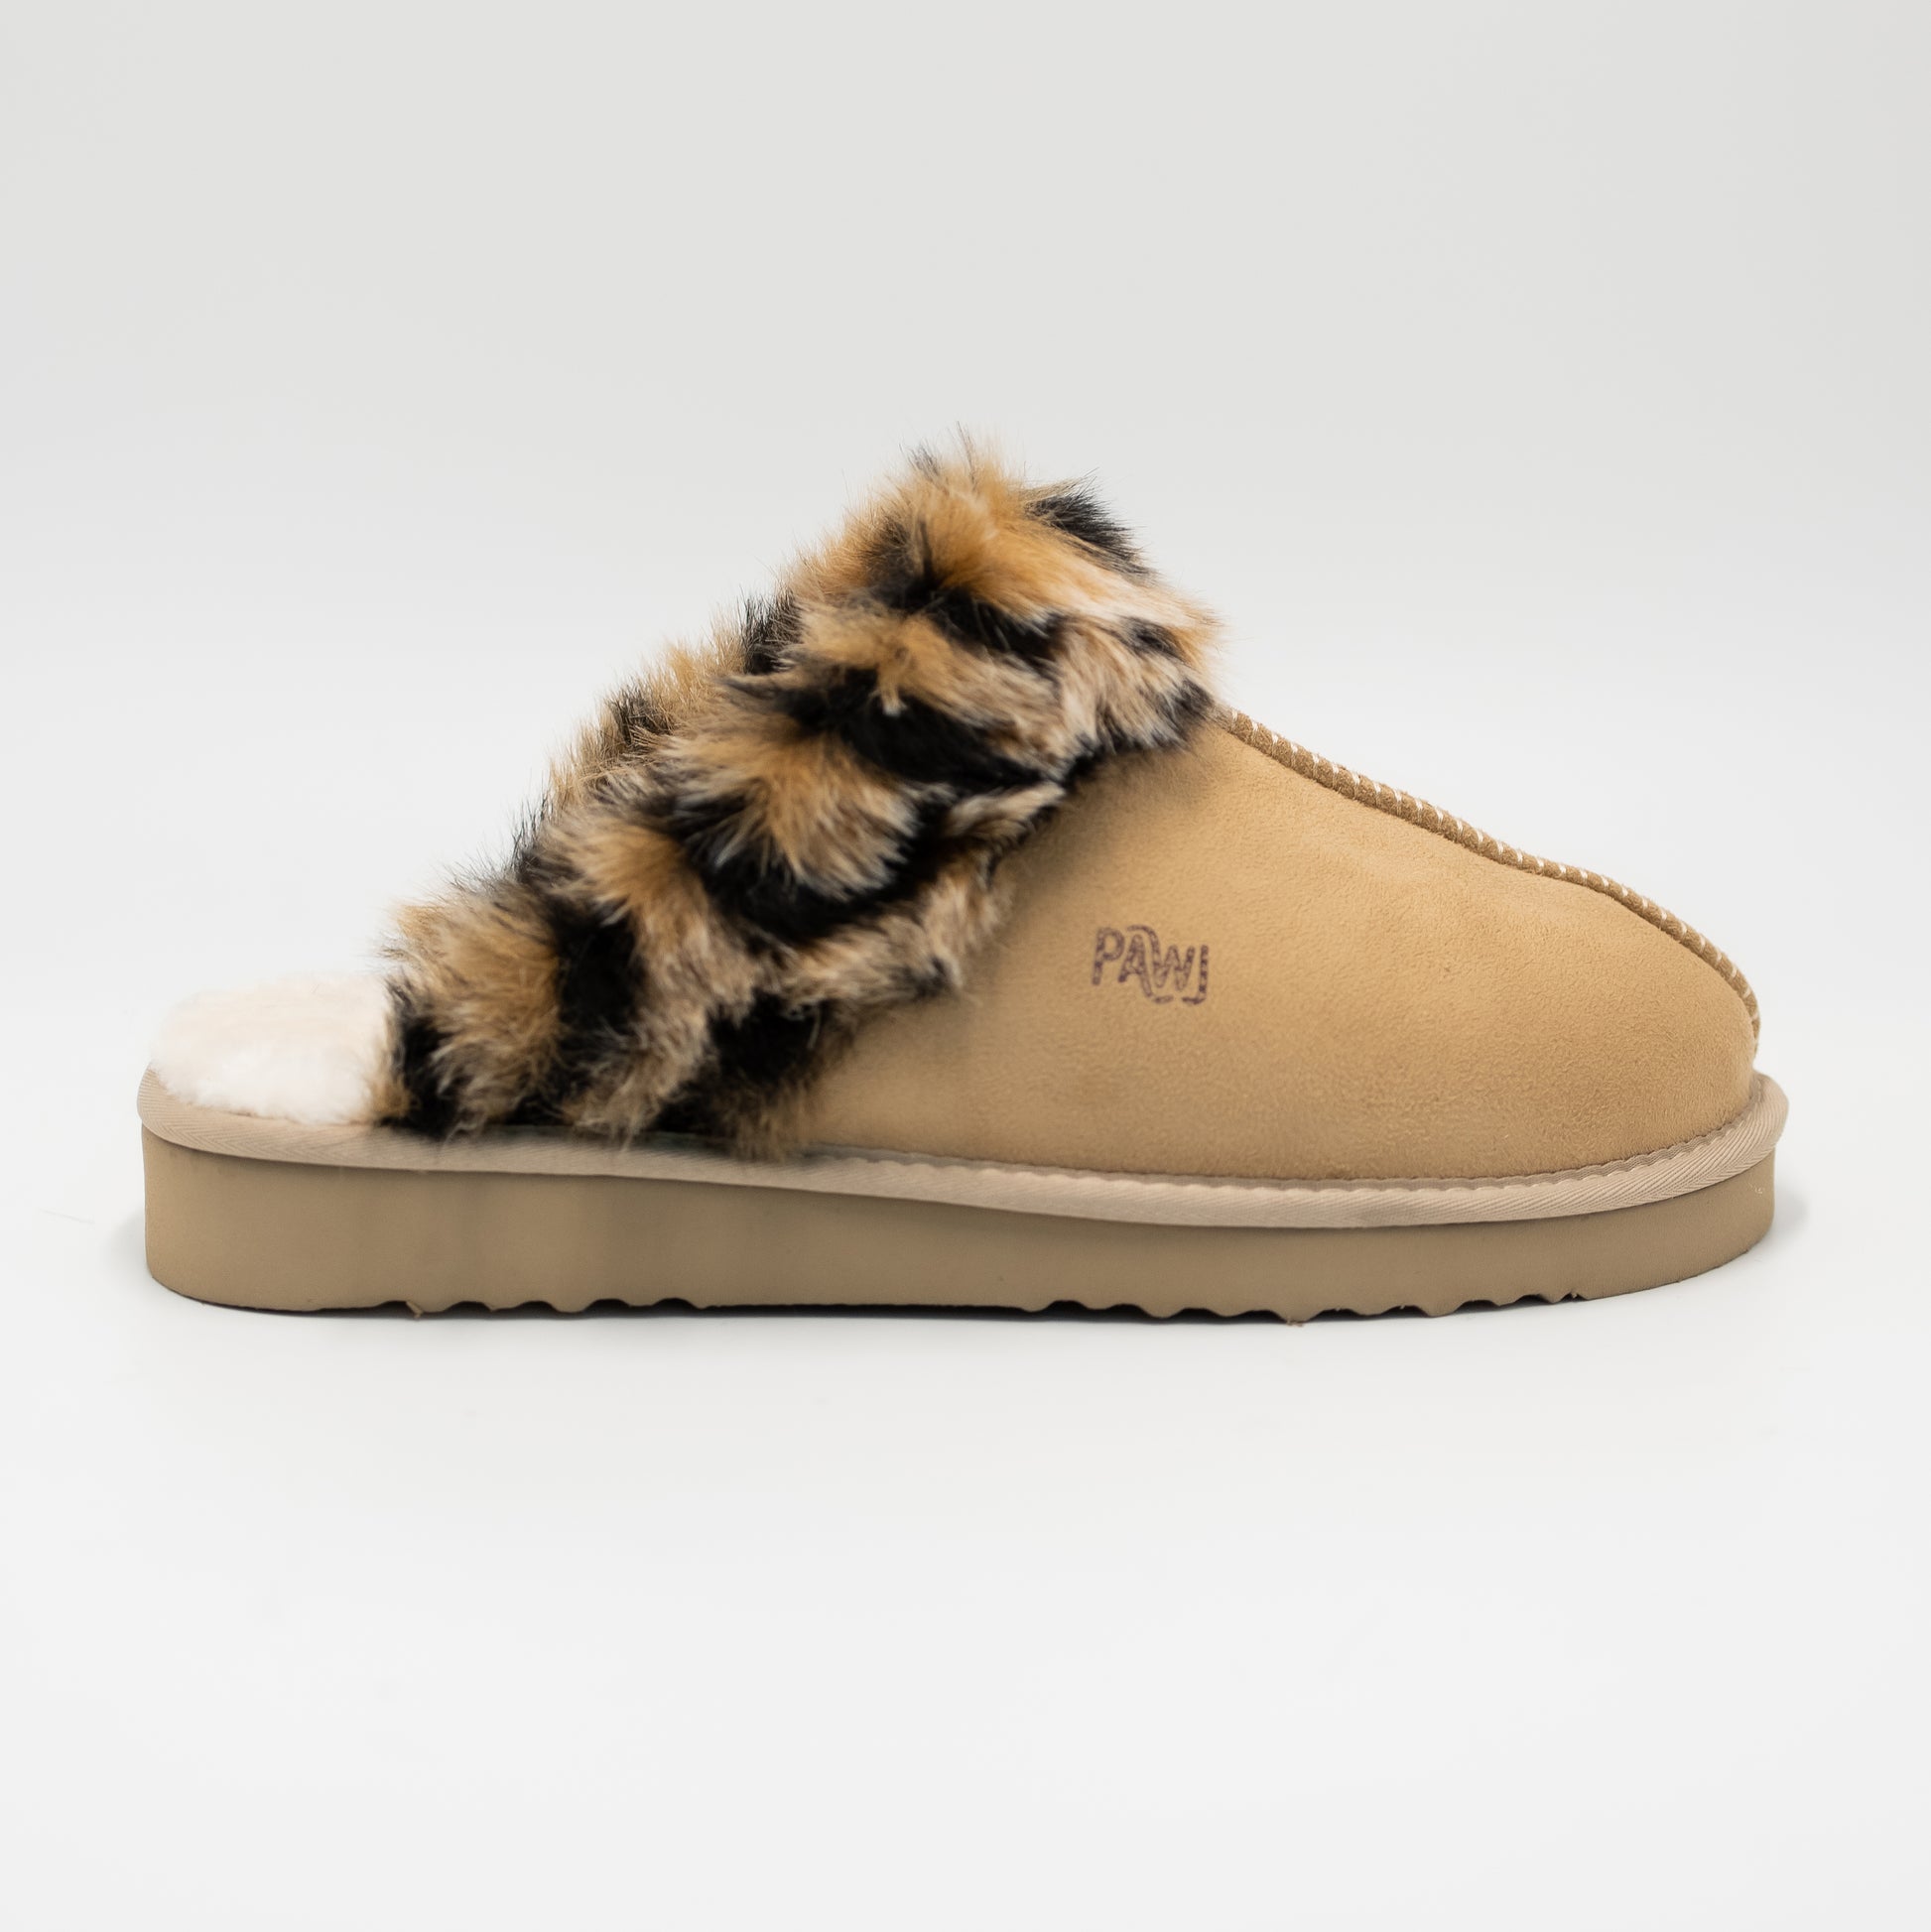 PAWJ California | Slippers - Tan / Wild Leopard | Vegan, Cruelty-Free Footwear